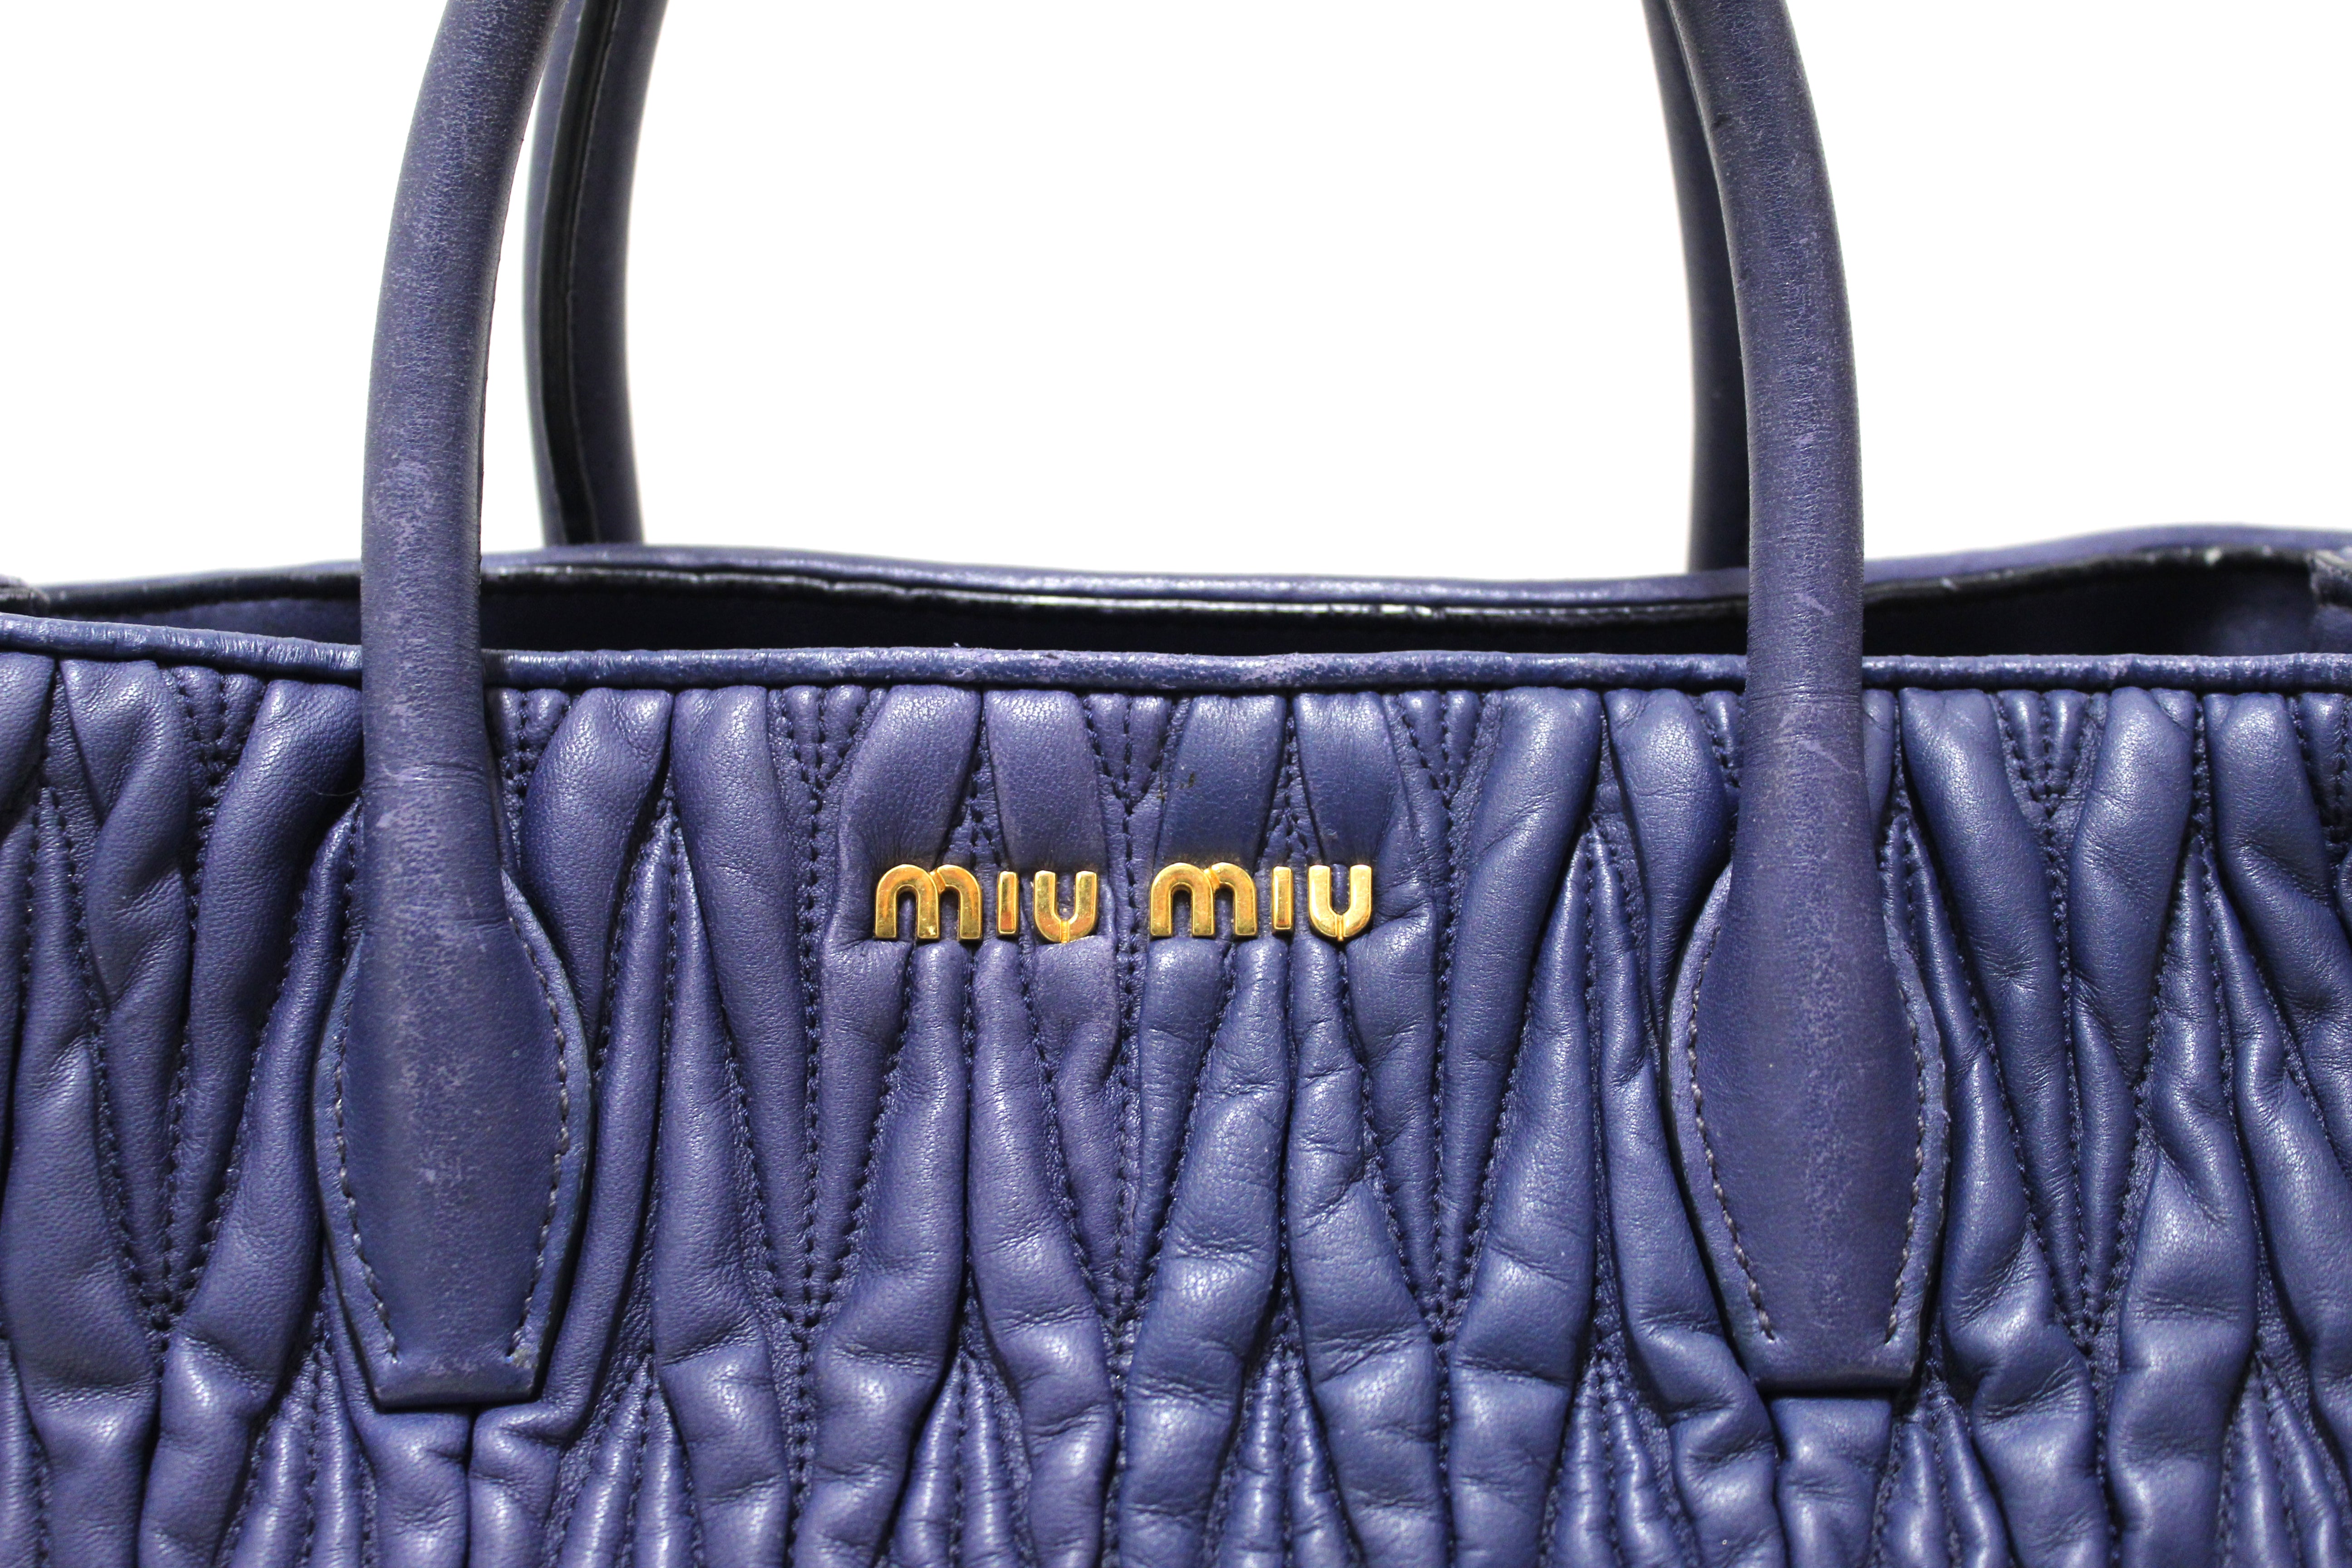 Authentic Miu Miu Blue Nappa Leather Maletasse Tote Bag With Long Strap